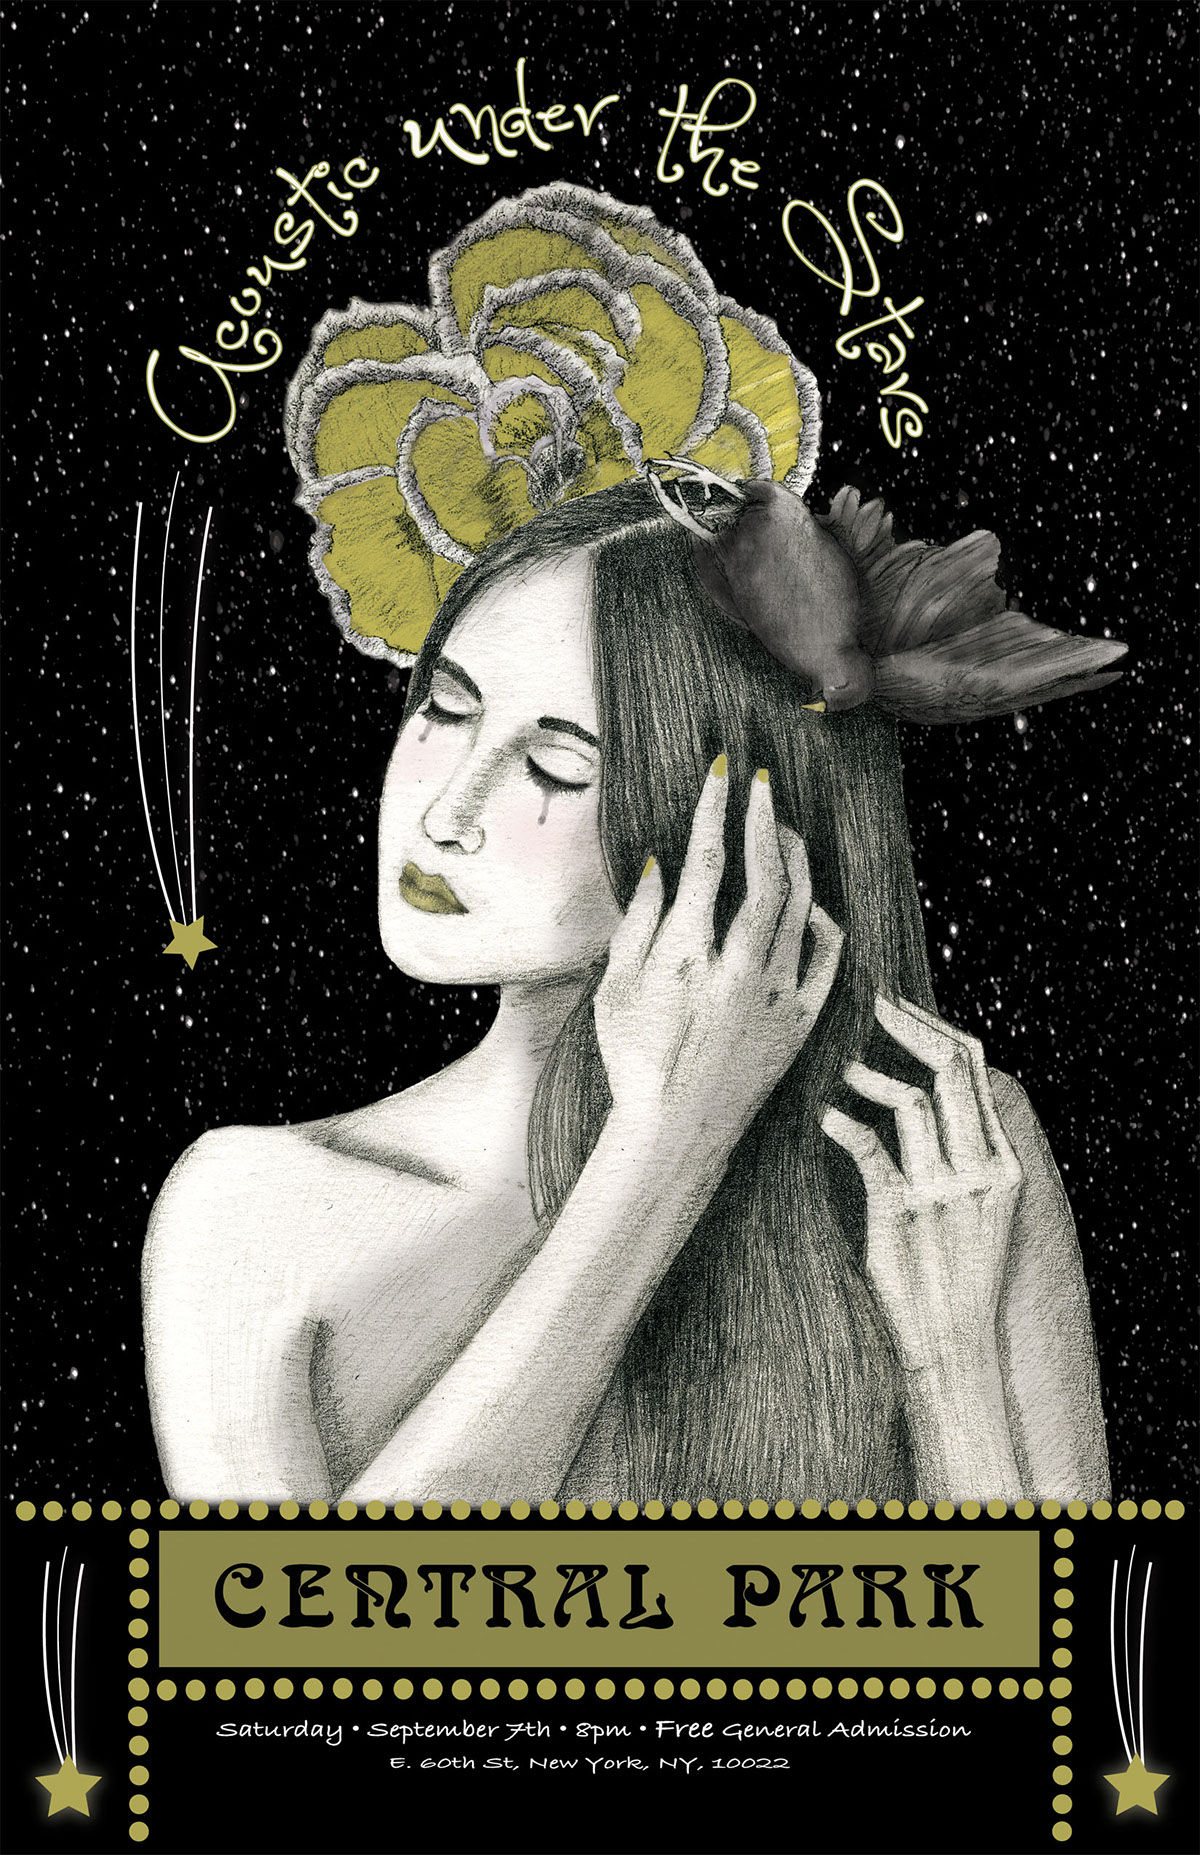 #sketch #illustration #Poster #girl #hands #deadbird #hair #STARS #mockup #vinyl  #record #acoustic #music #sadness